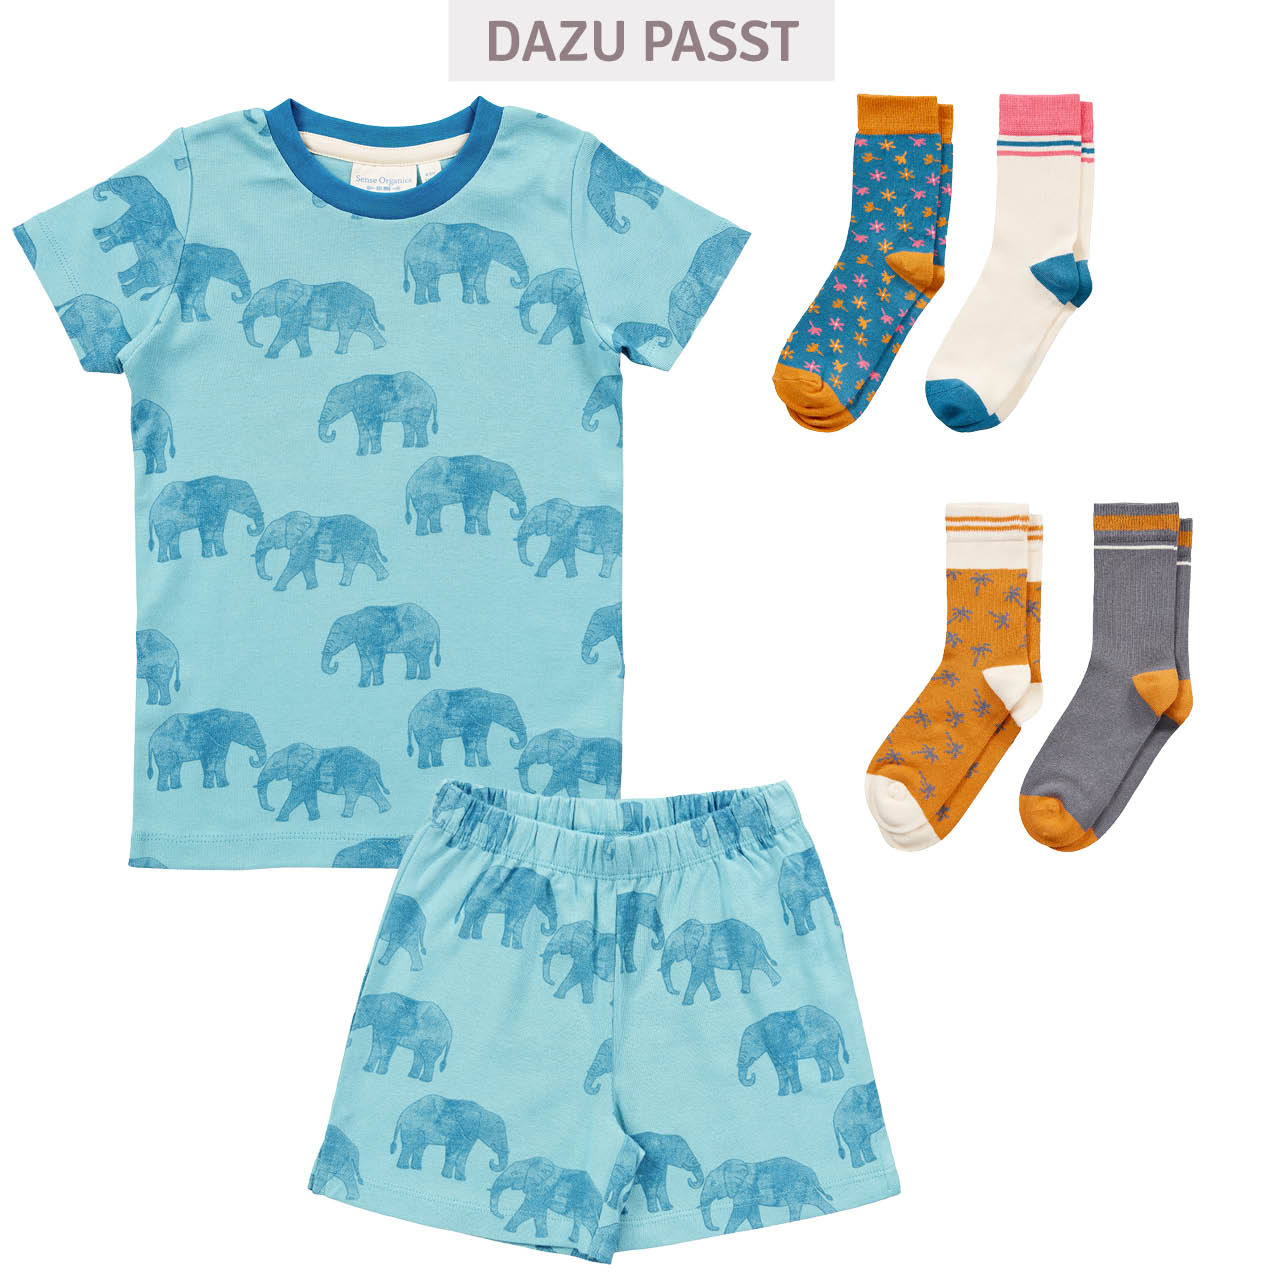 Sommer Kinder Schlafanzug kurz Elefanten hellblau